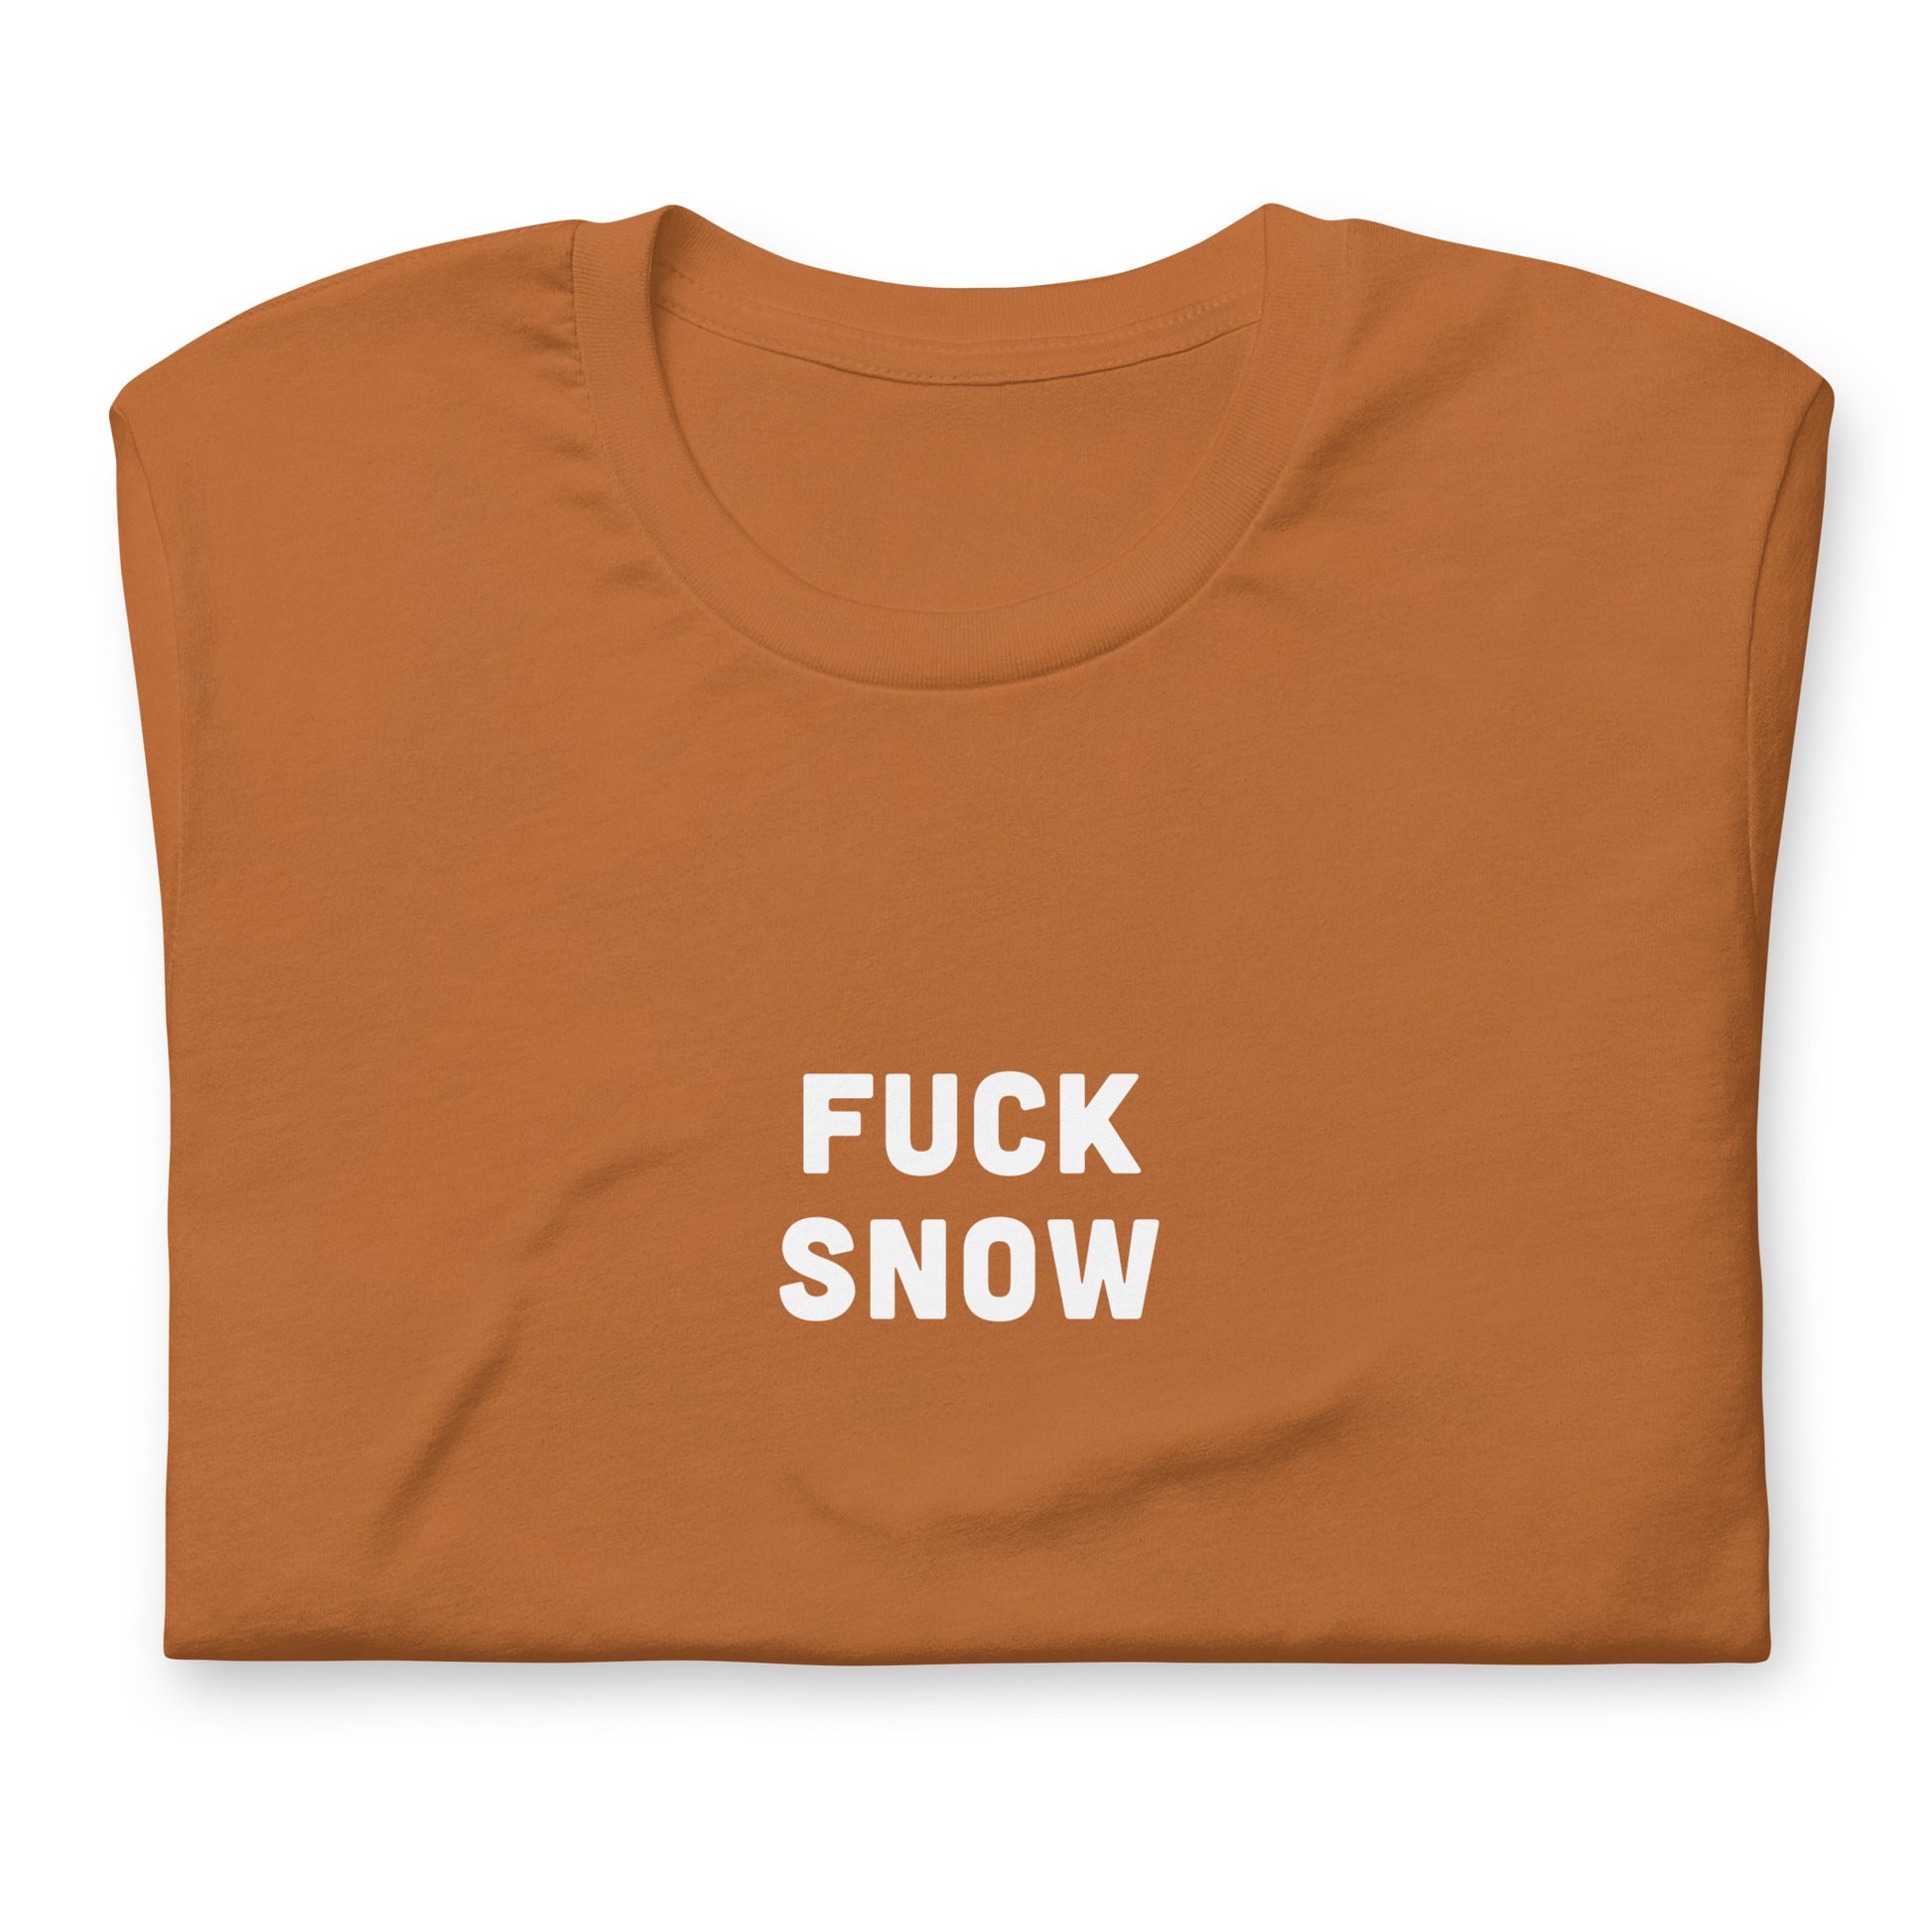 Fuck Snow T-Shirt Size XL Color Navy